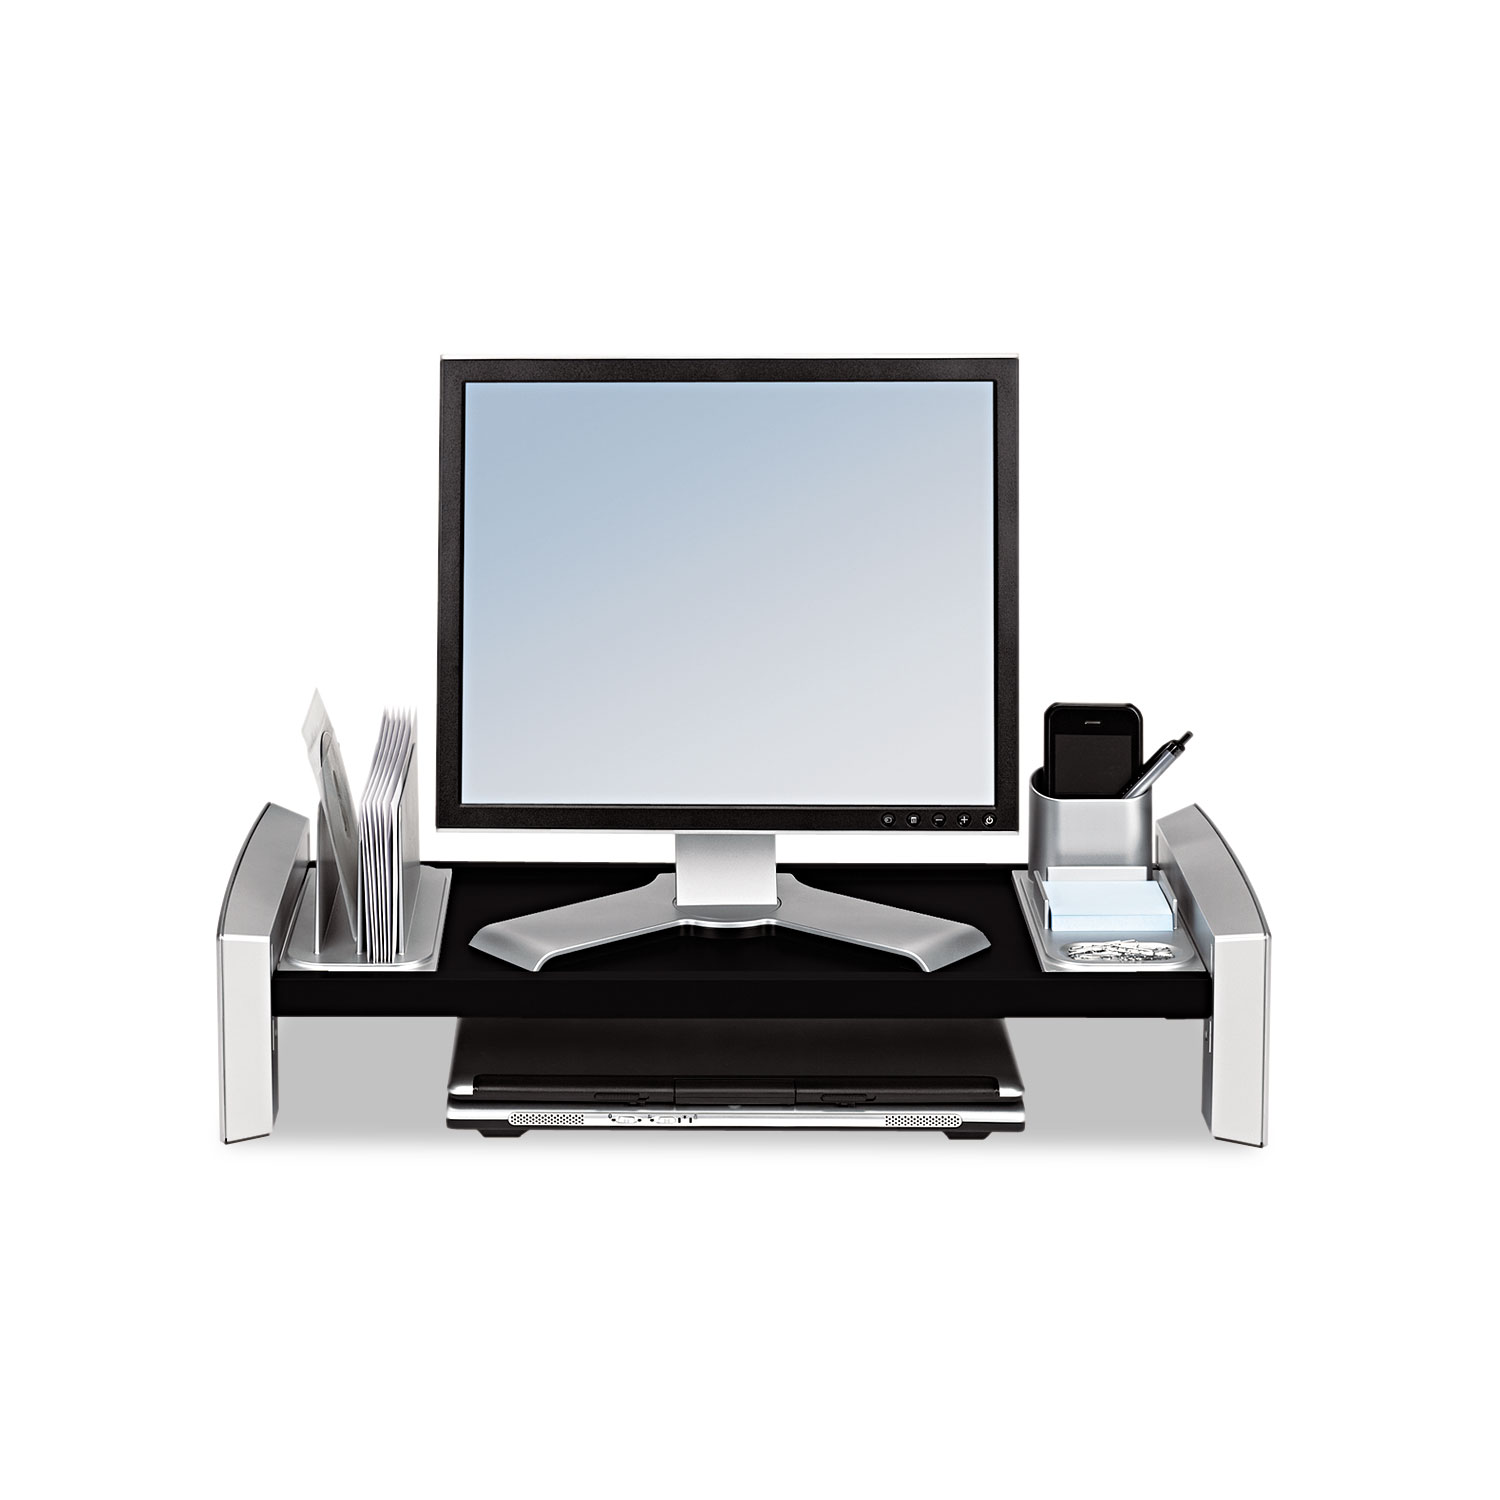 Professional Series Flat Panel Workstation, 25 7/8 x 11 1/2 x 4 1/2,Black/Silver